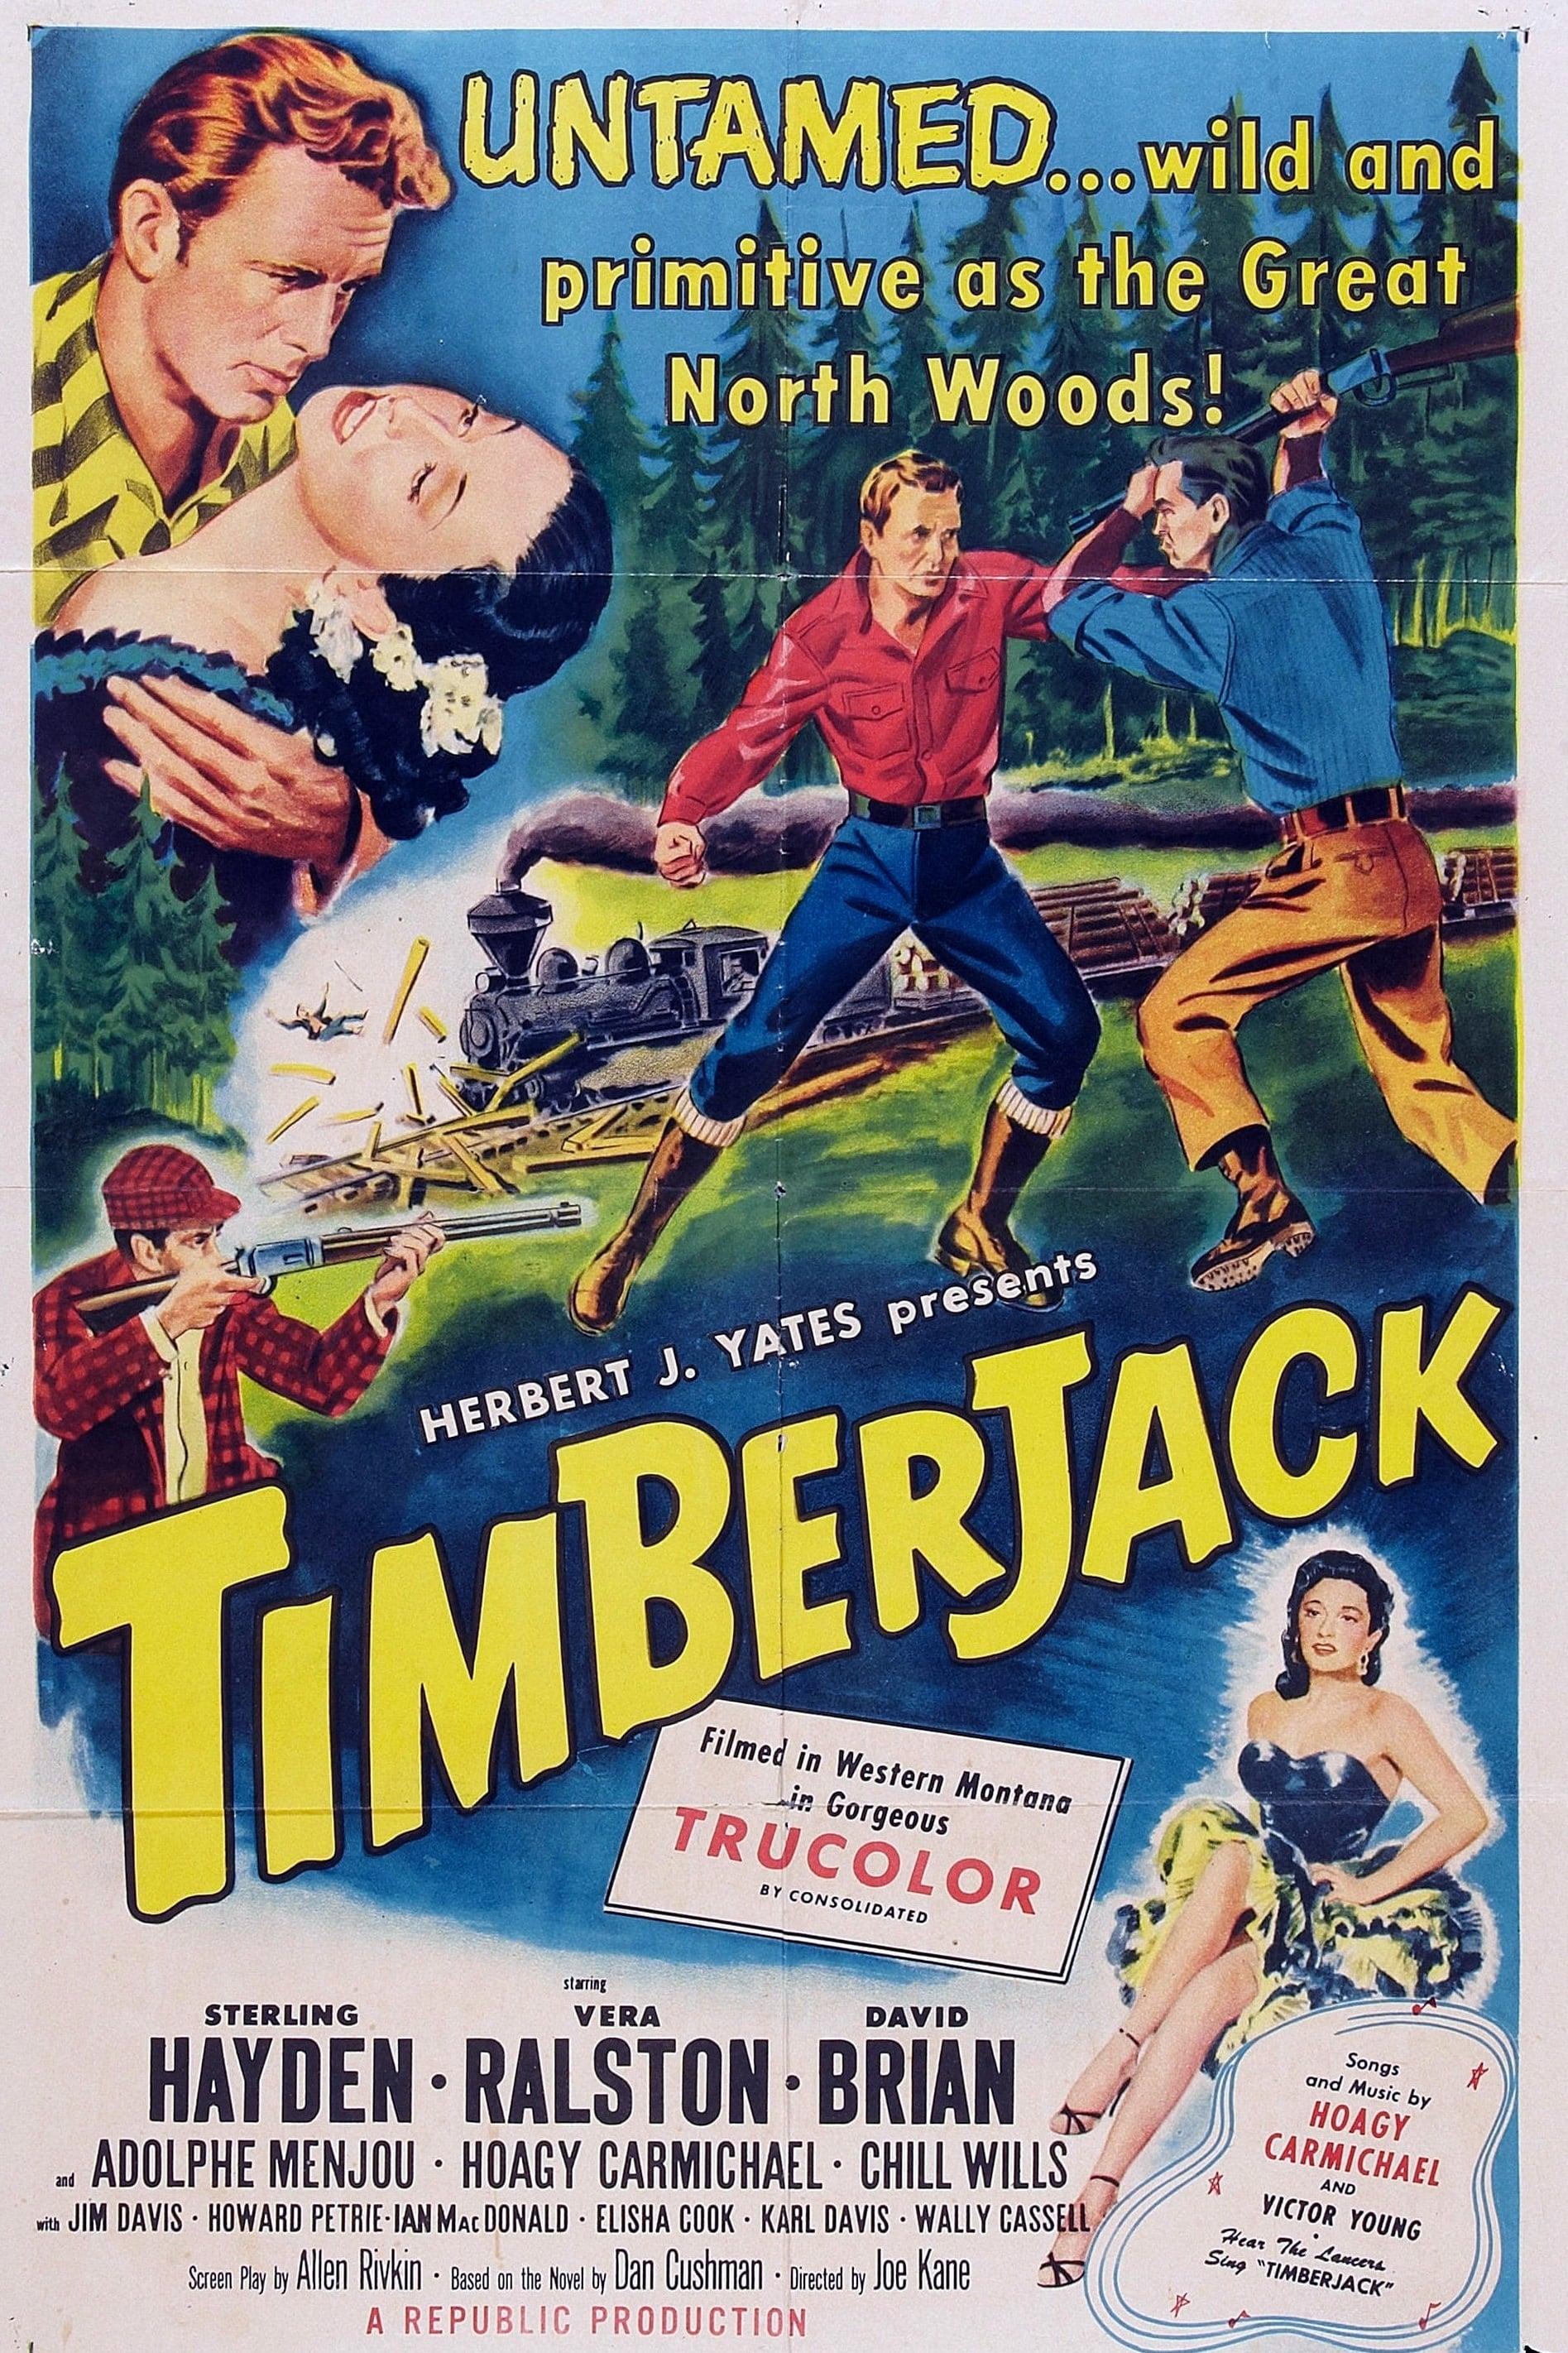 Timberjack poster